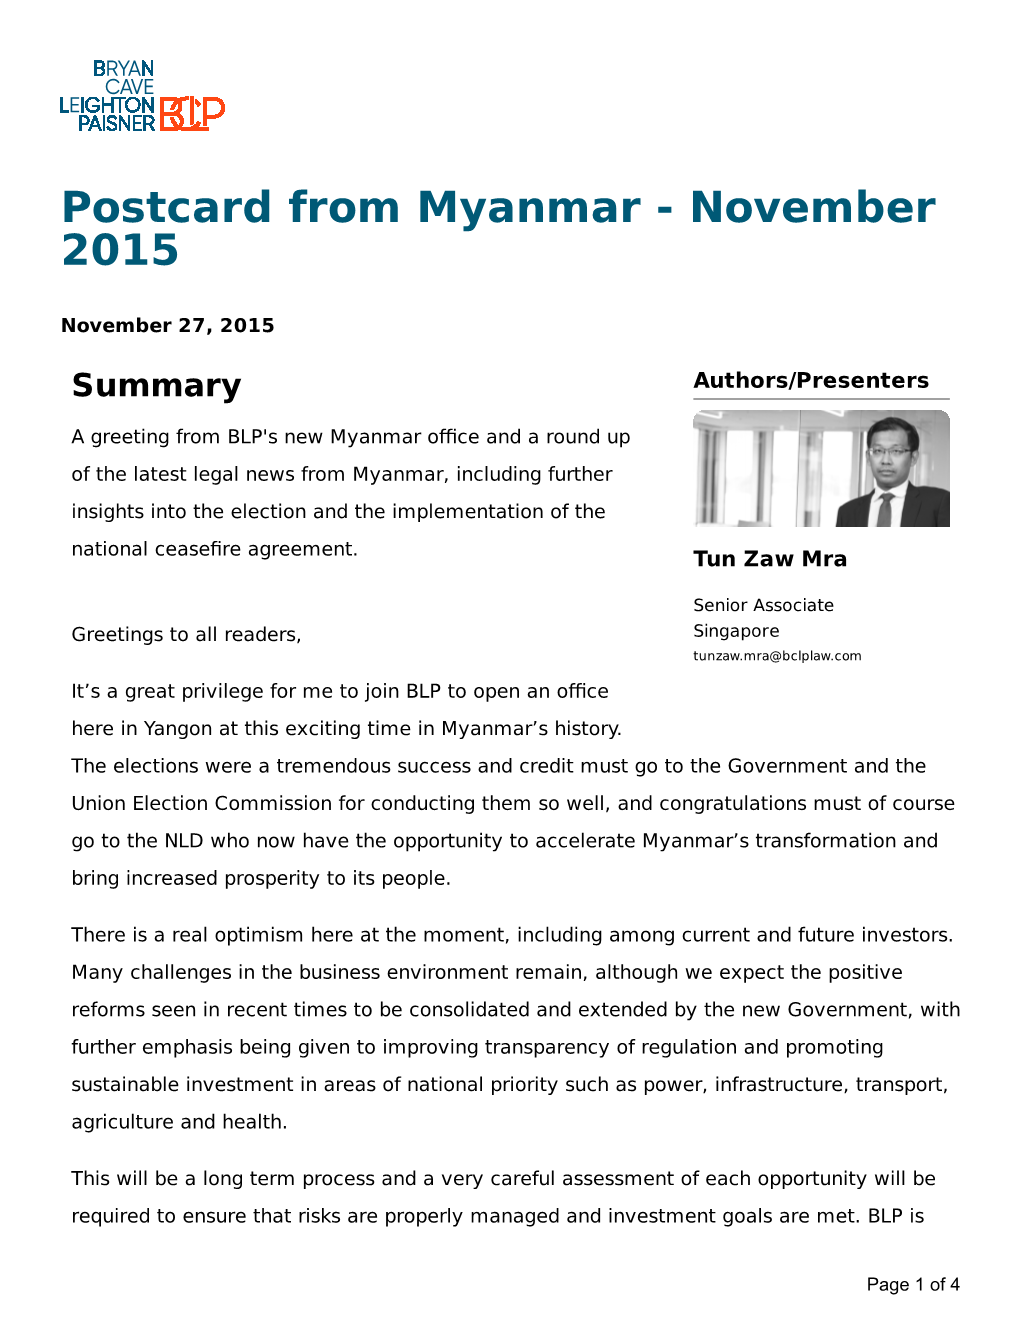 Postcard from Myanmar - November 2015